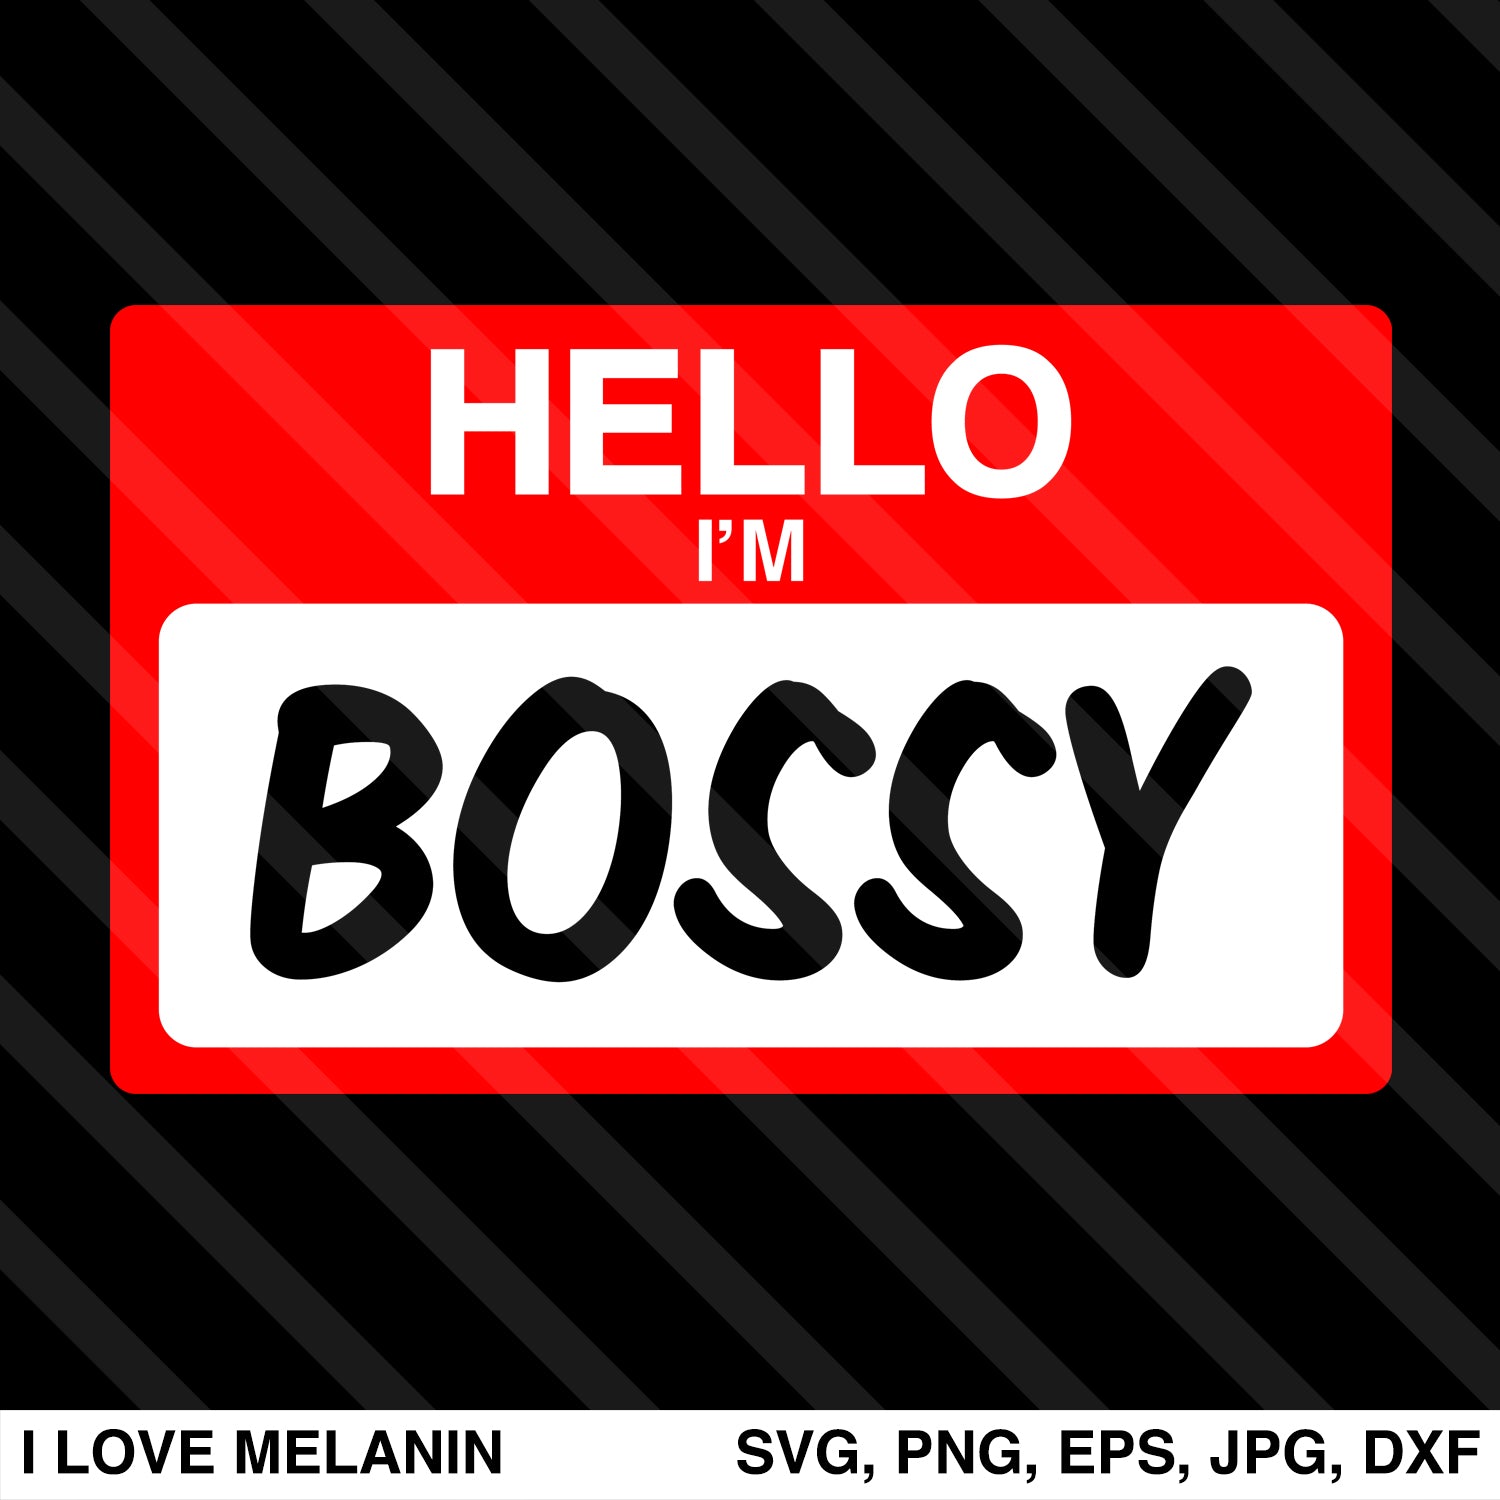 Hello I'm Bossy SVG